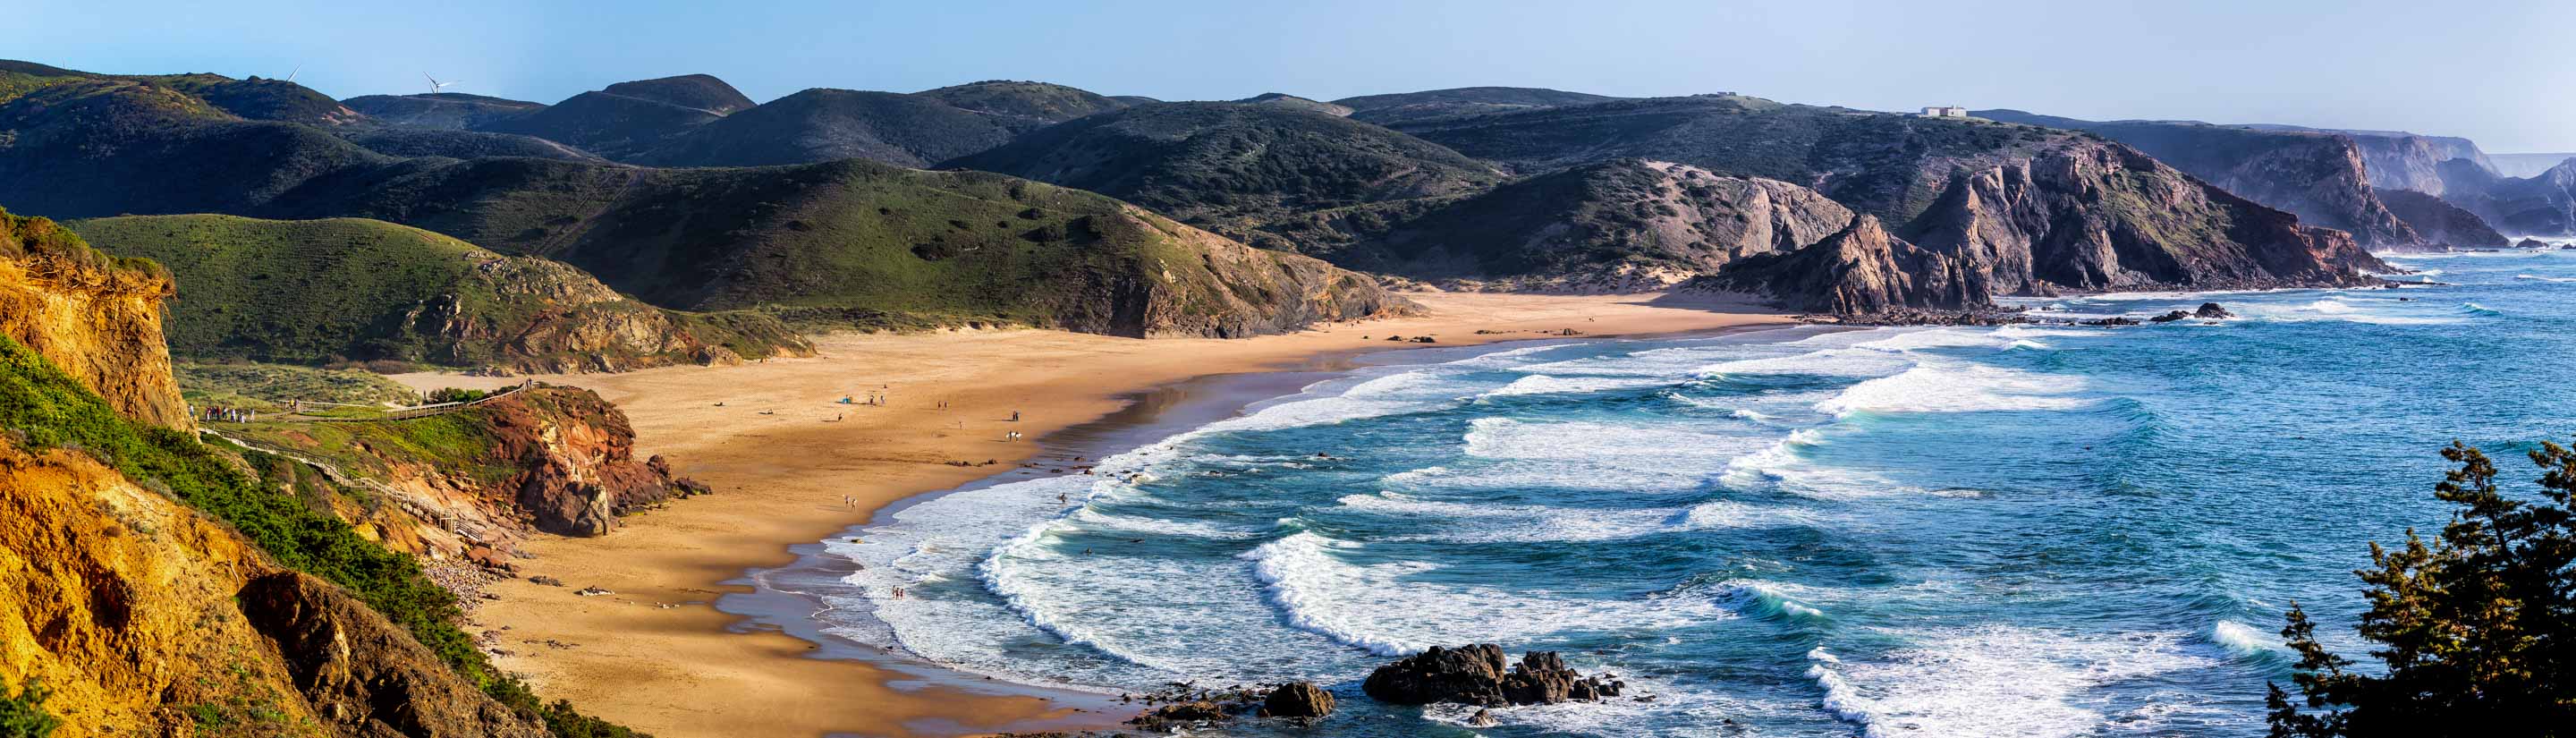 Rundreise Portugal: Wildromantik pur